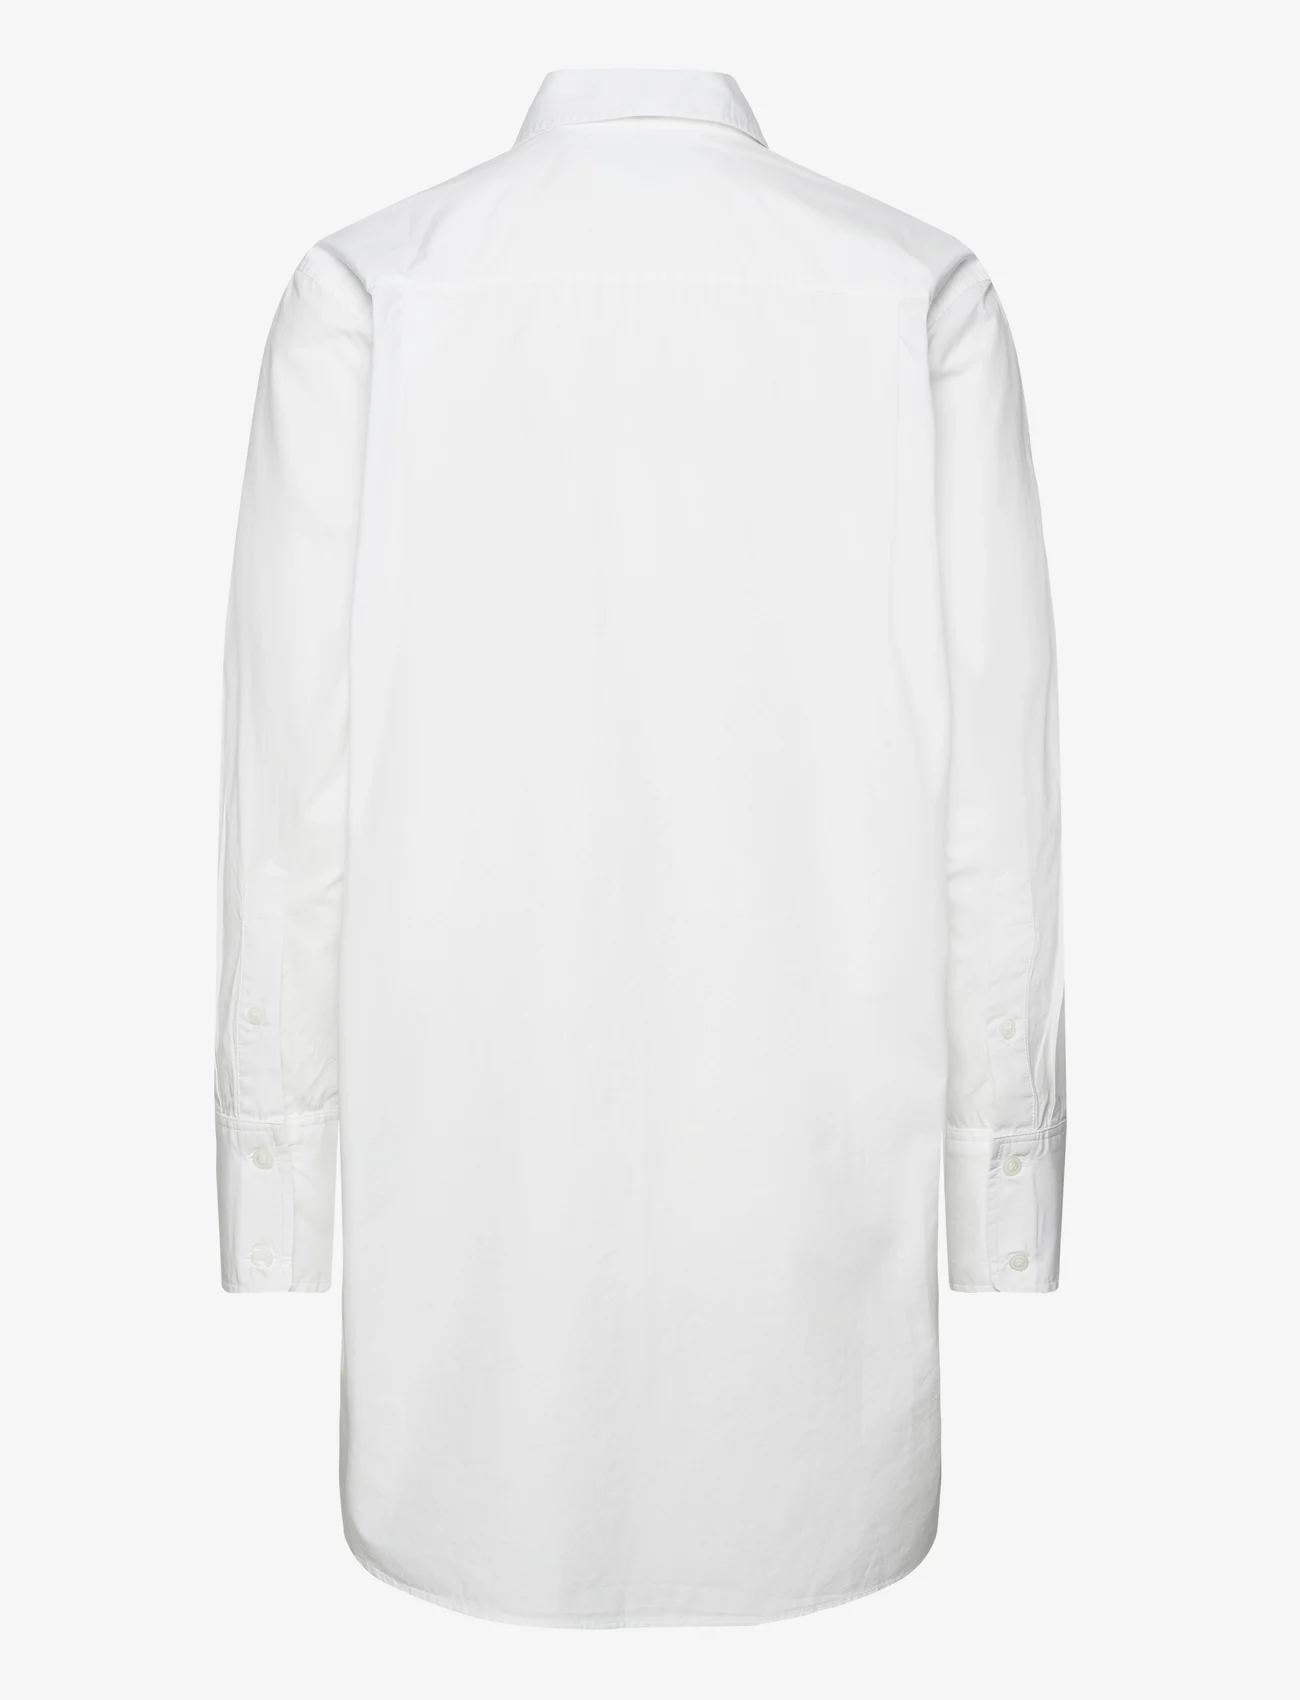 Tommy Hilfiger - ORG CO HERO SHORT SHIRT DRESS LS - long-sleeved shirts - th optic white - 1